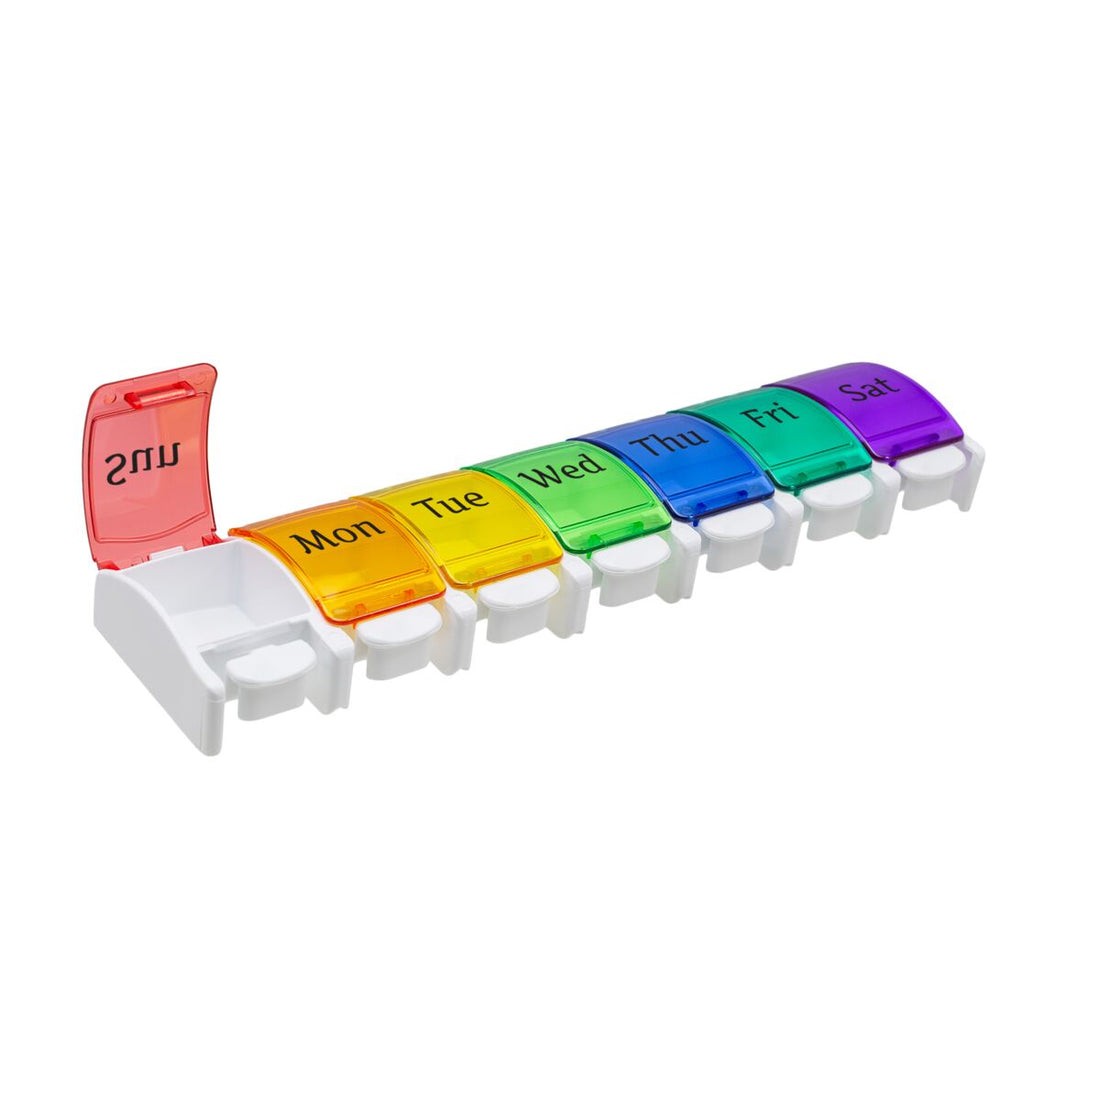 Ezy Dose® Weekly PB Pill Planner, Rainbow